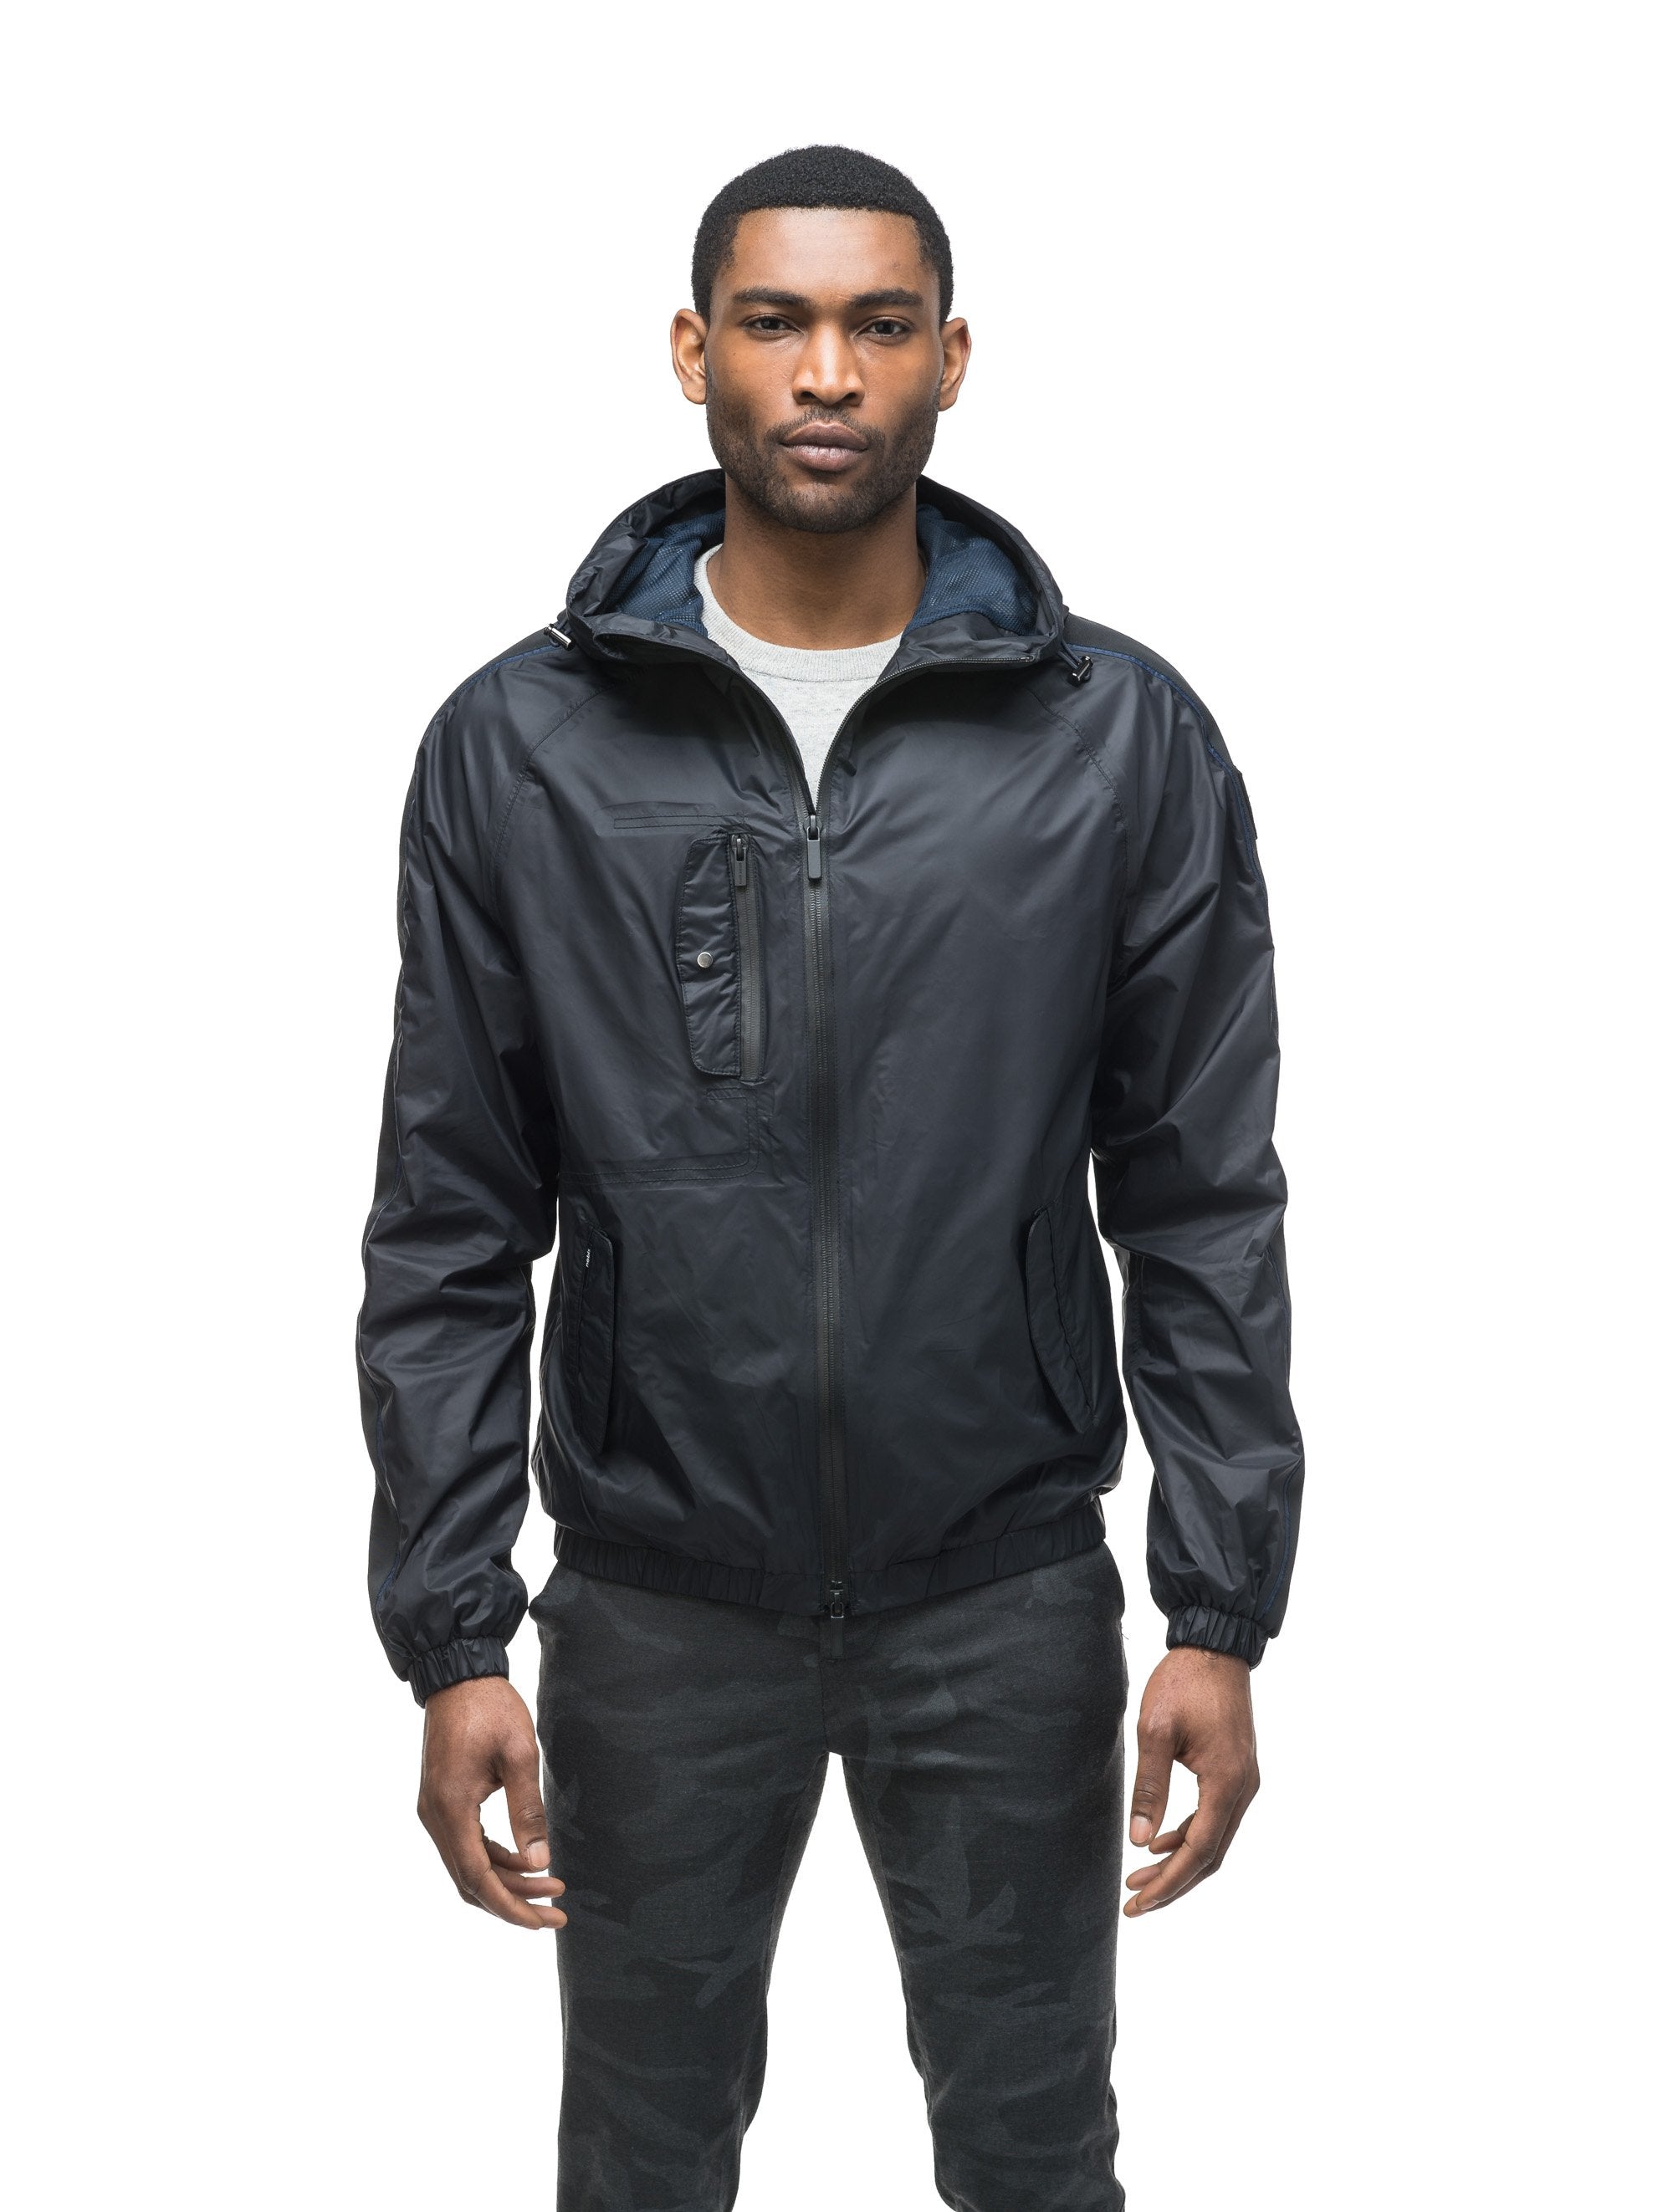 Portland windbreaker jacket - Men's — Groupe Pronature